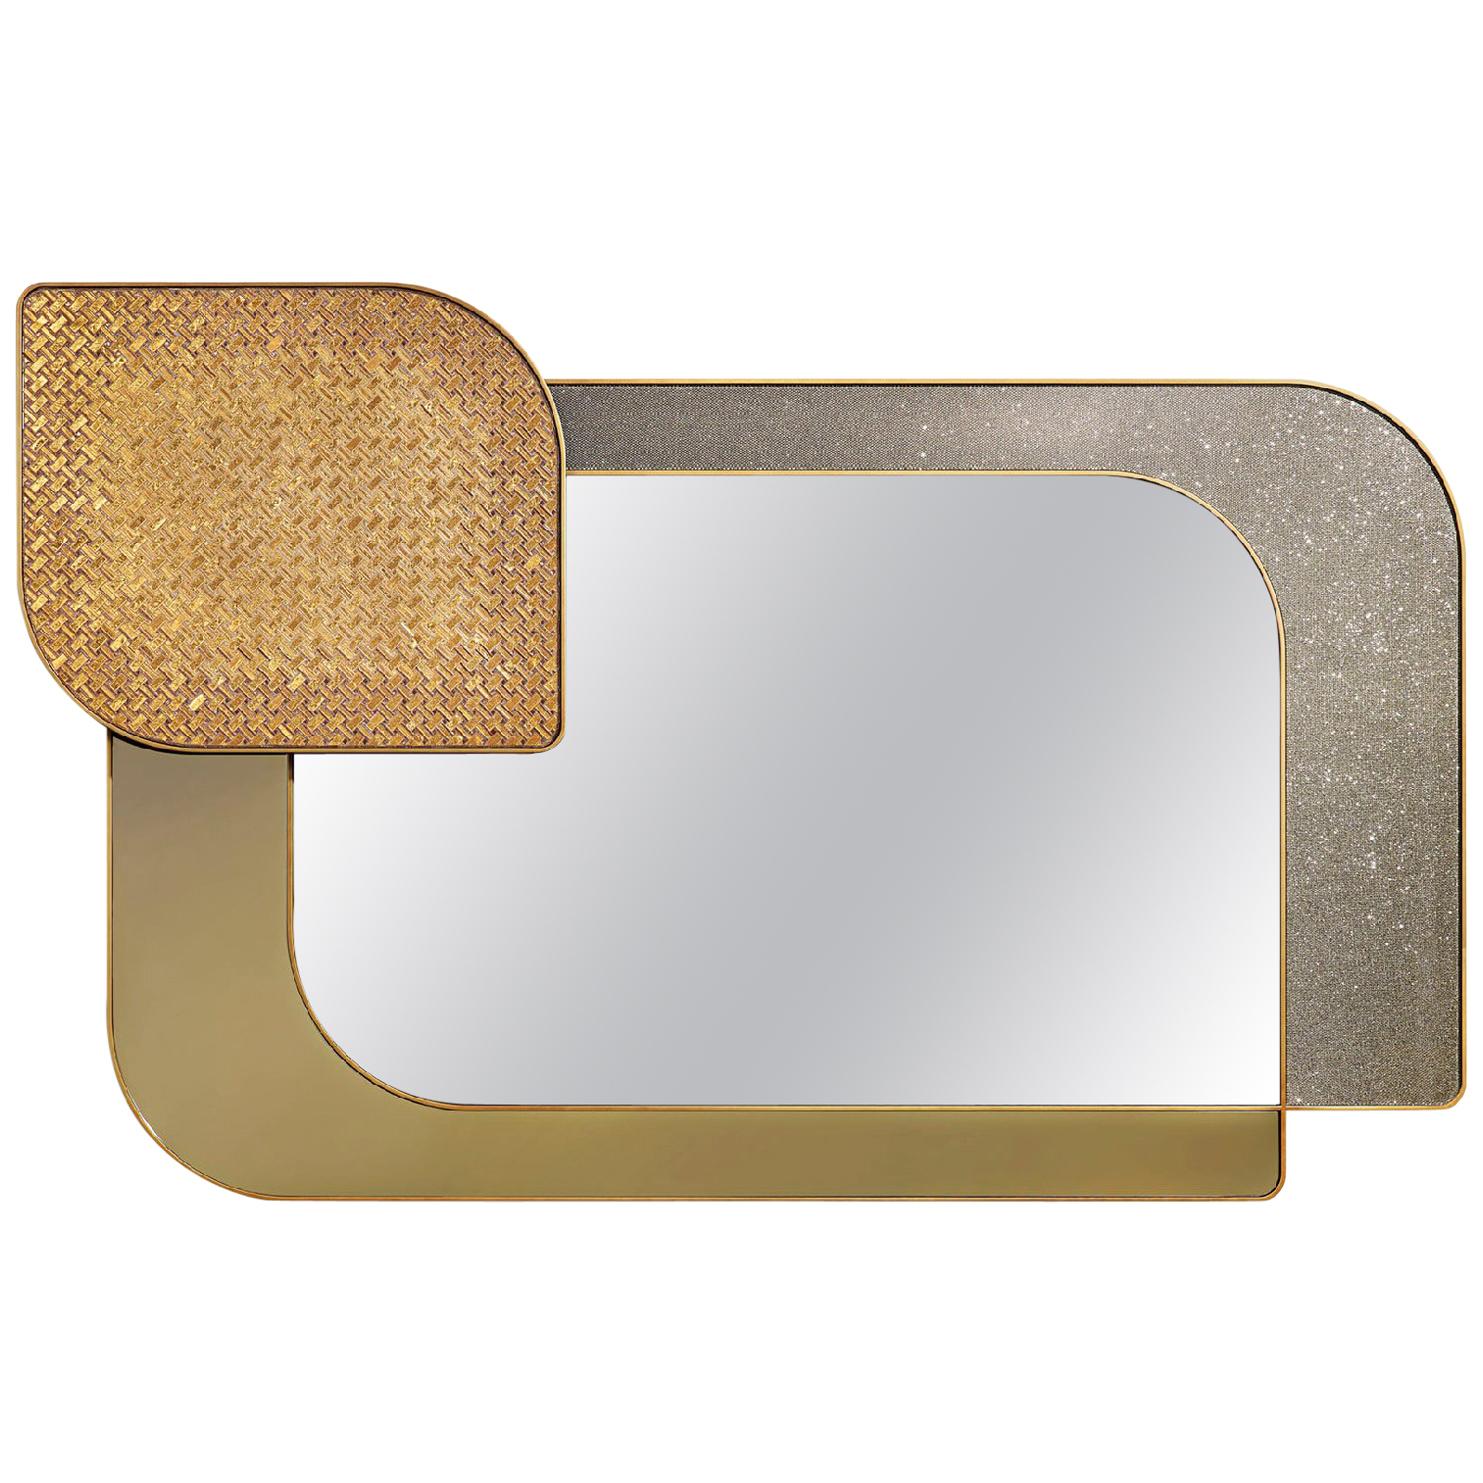 Mirror Bronze or Silver Finish Decorative Tiny Mosaic LED Backlighting